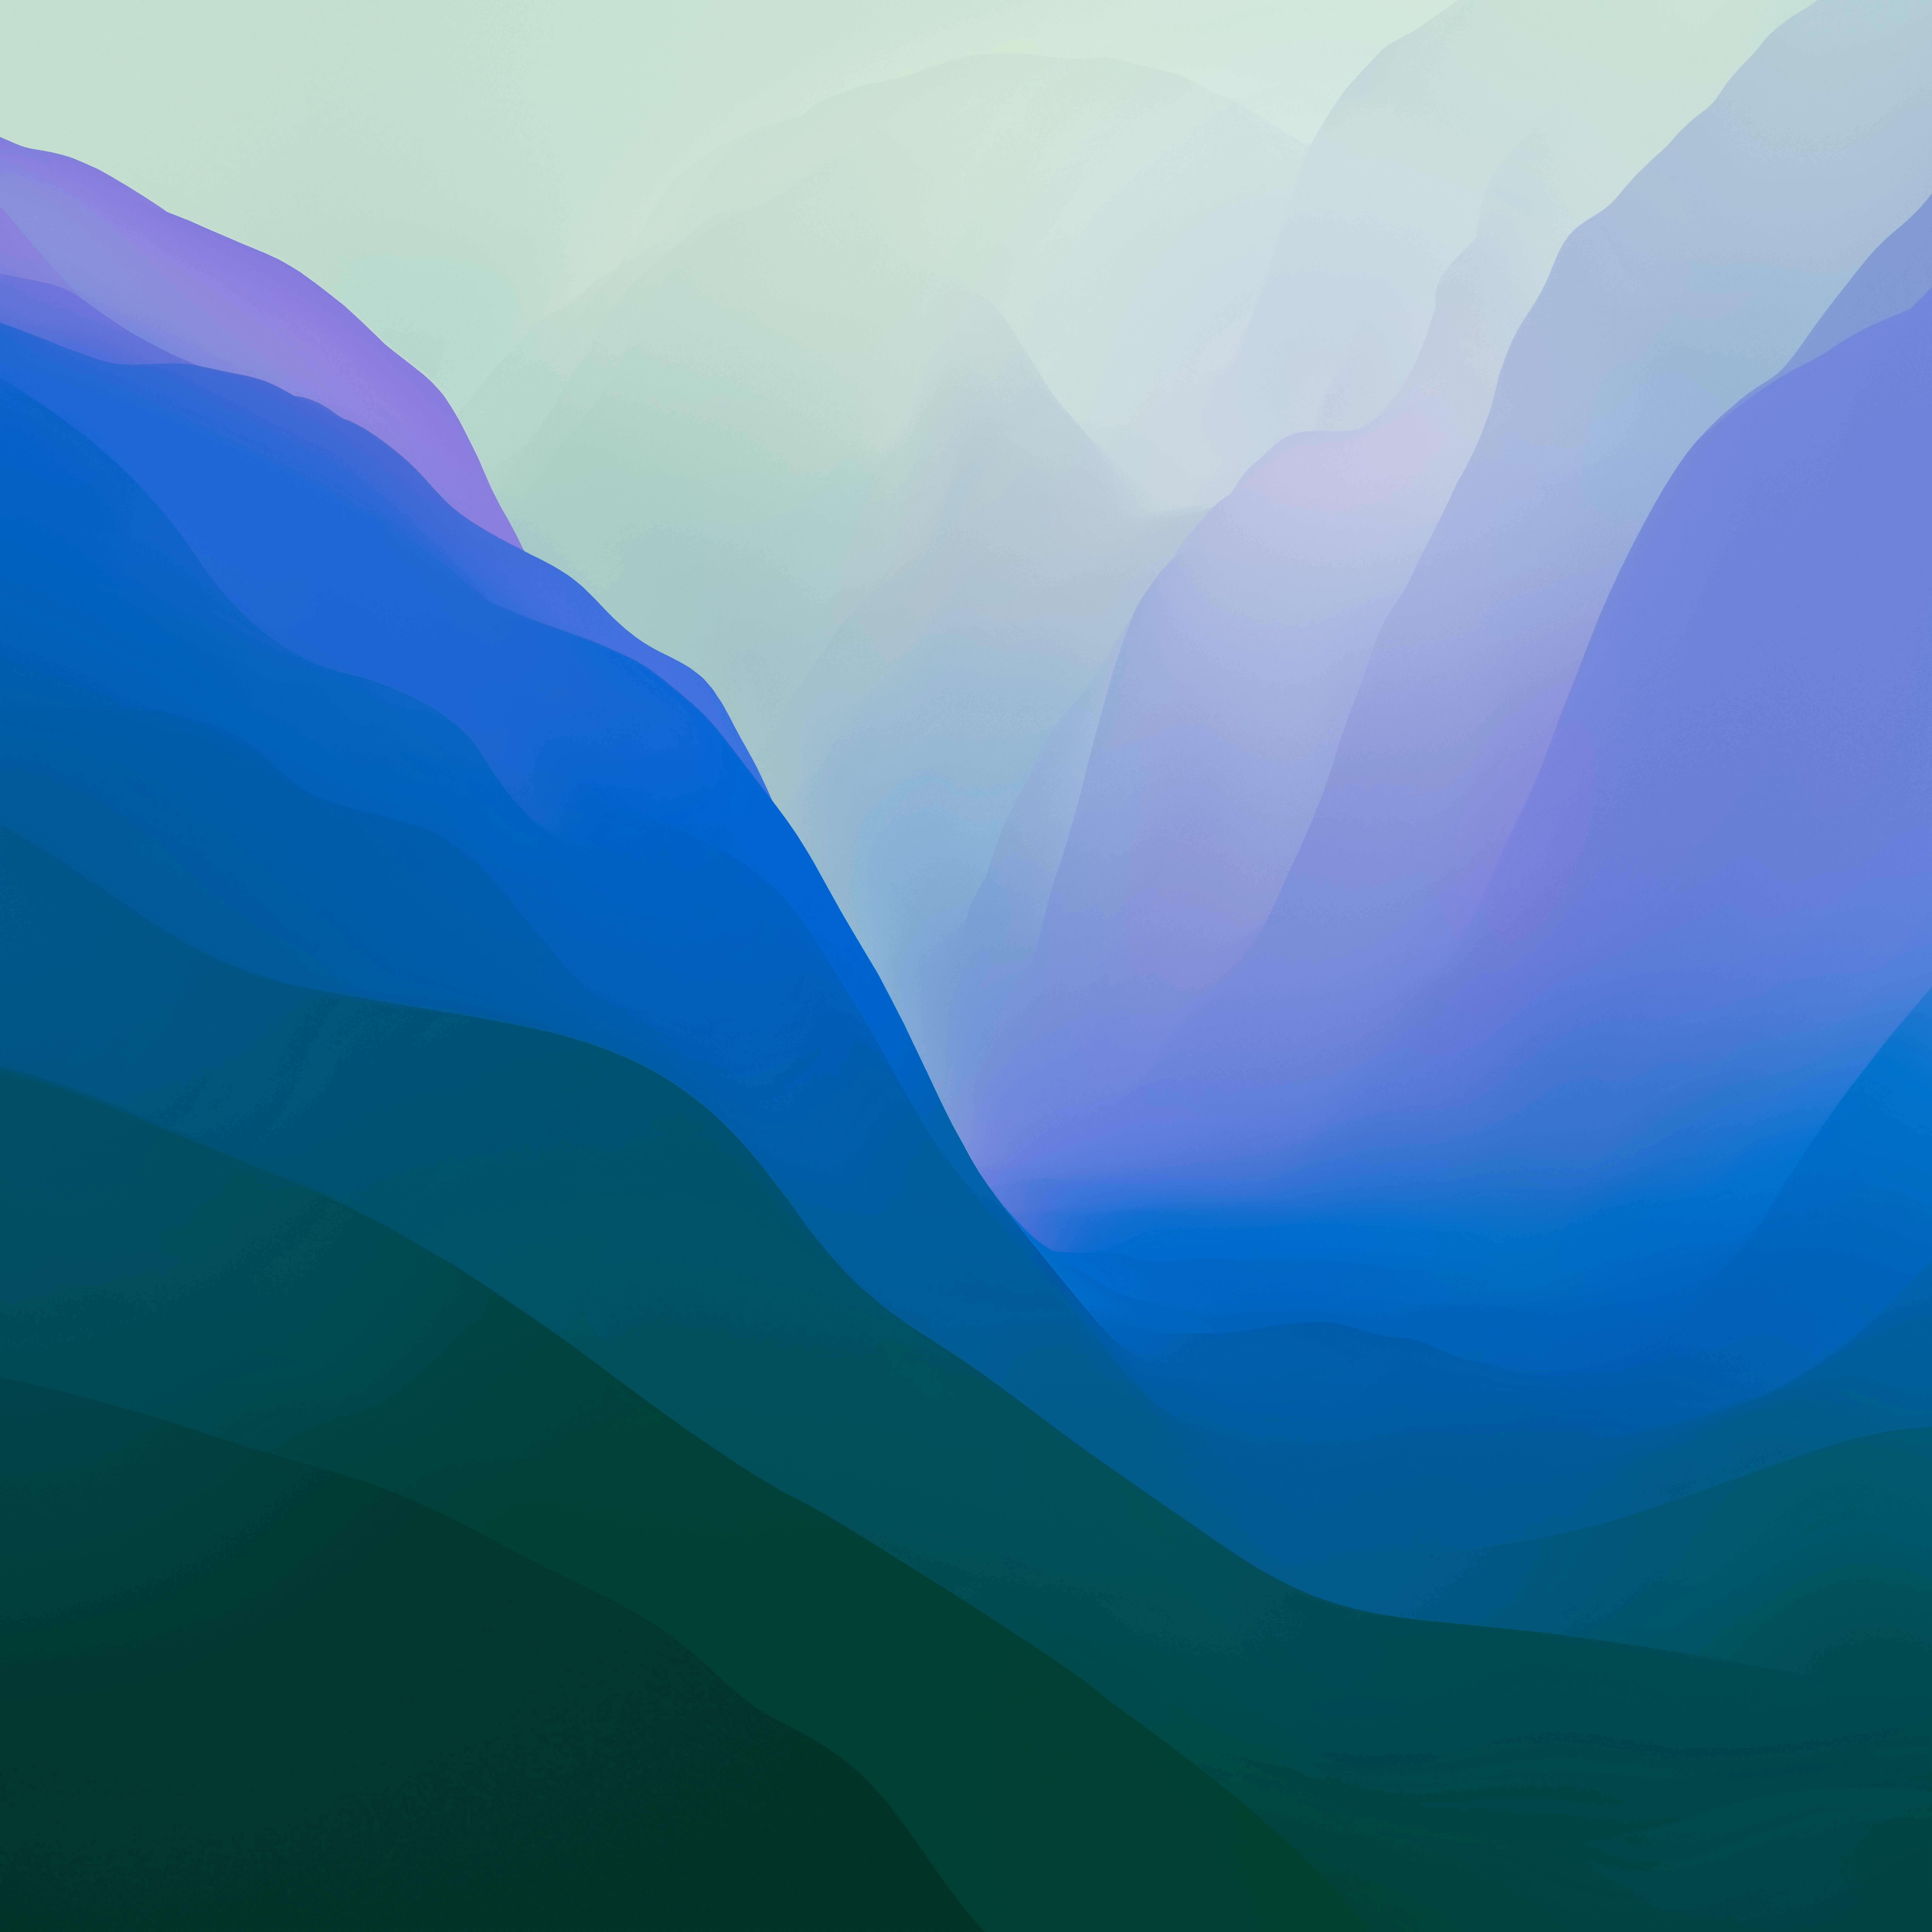 macOS Monterey wallpaper idownloadblog mattbirchler variant 2 blue green